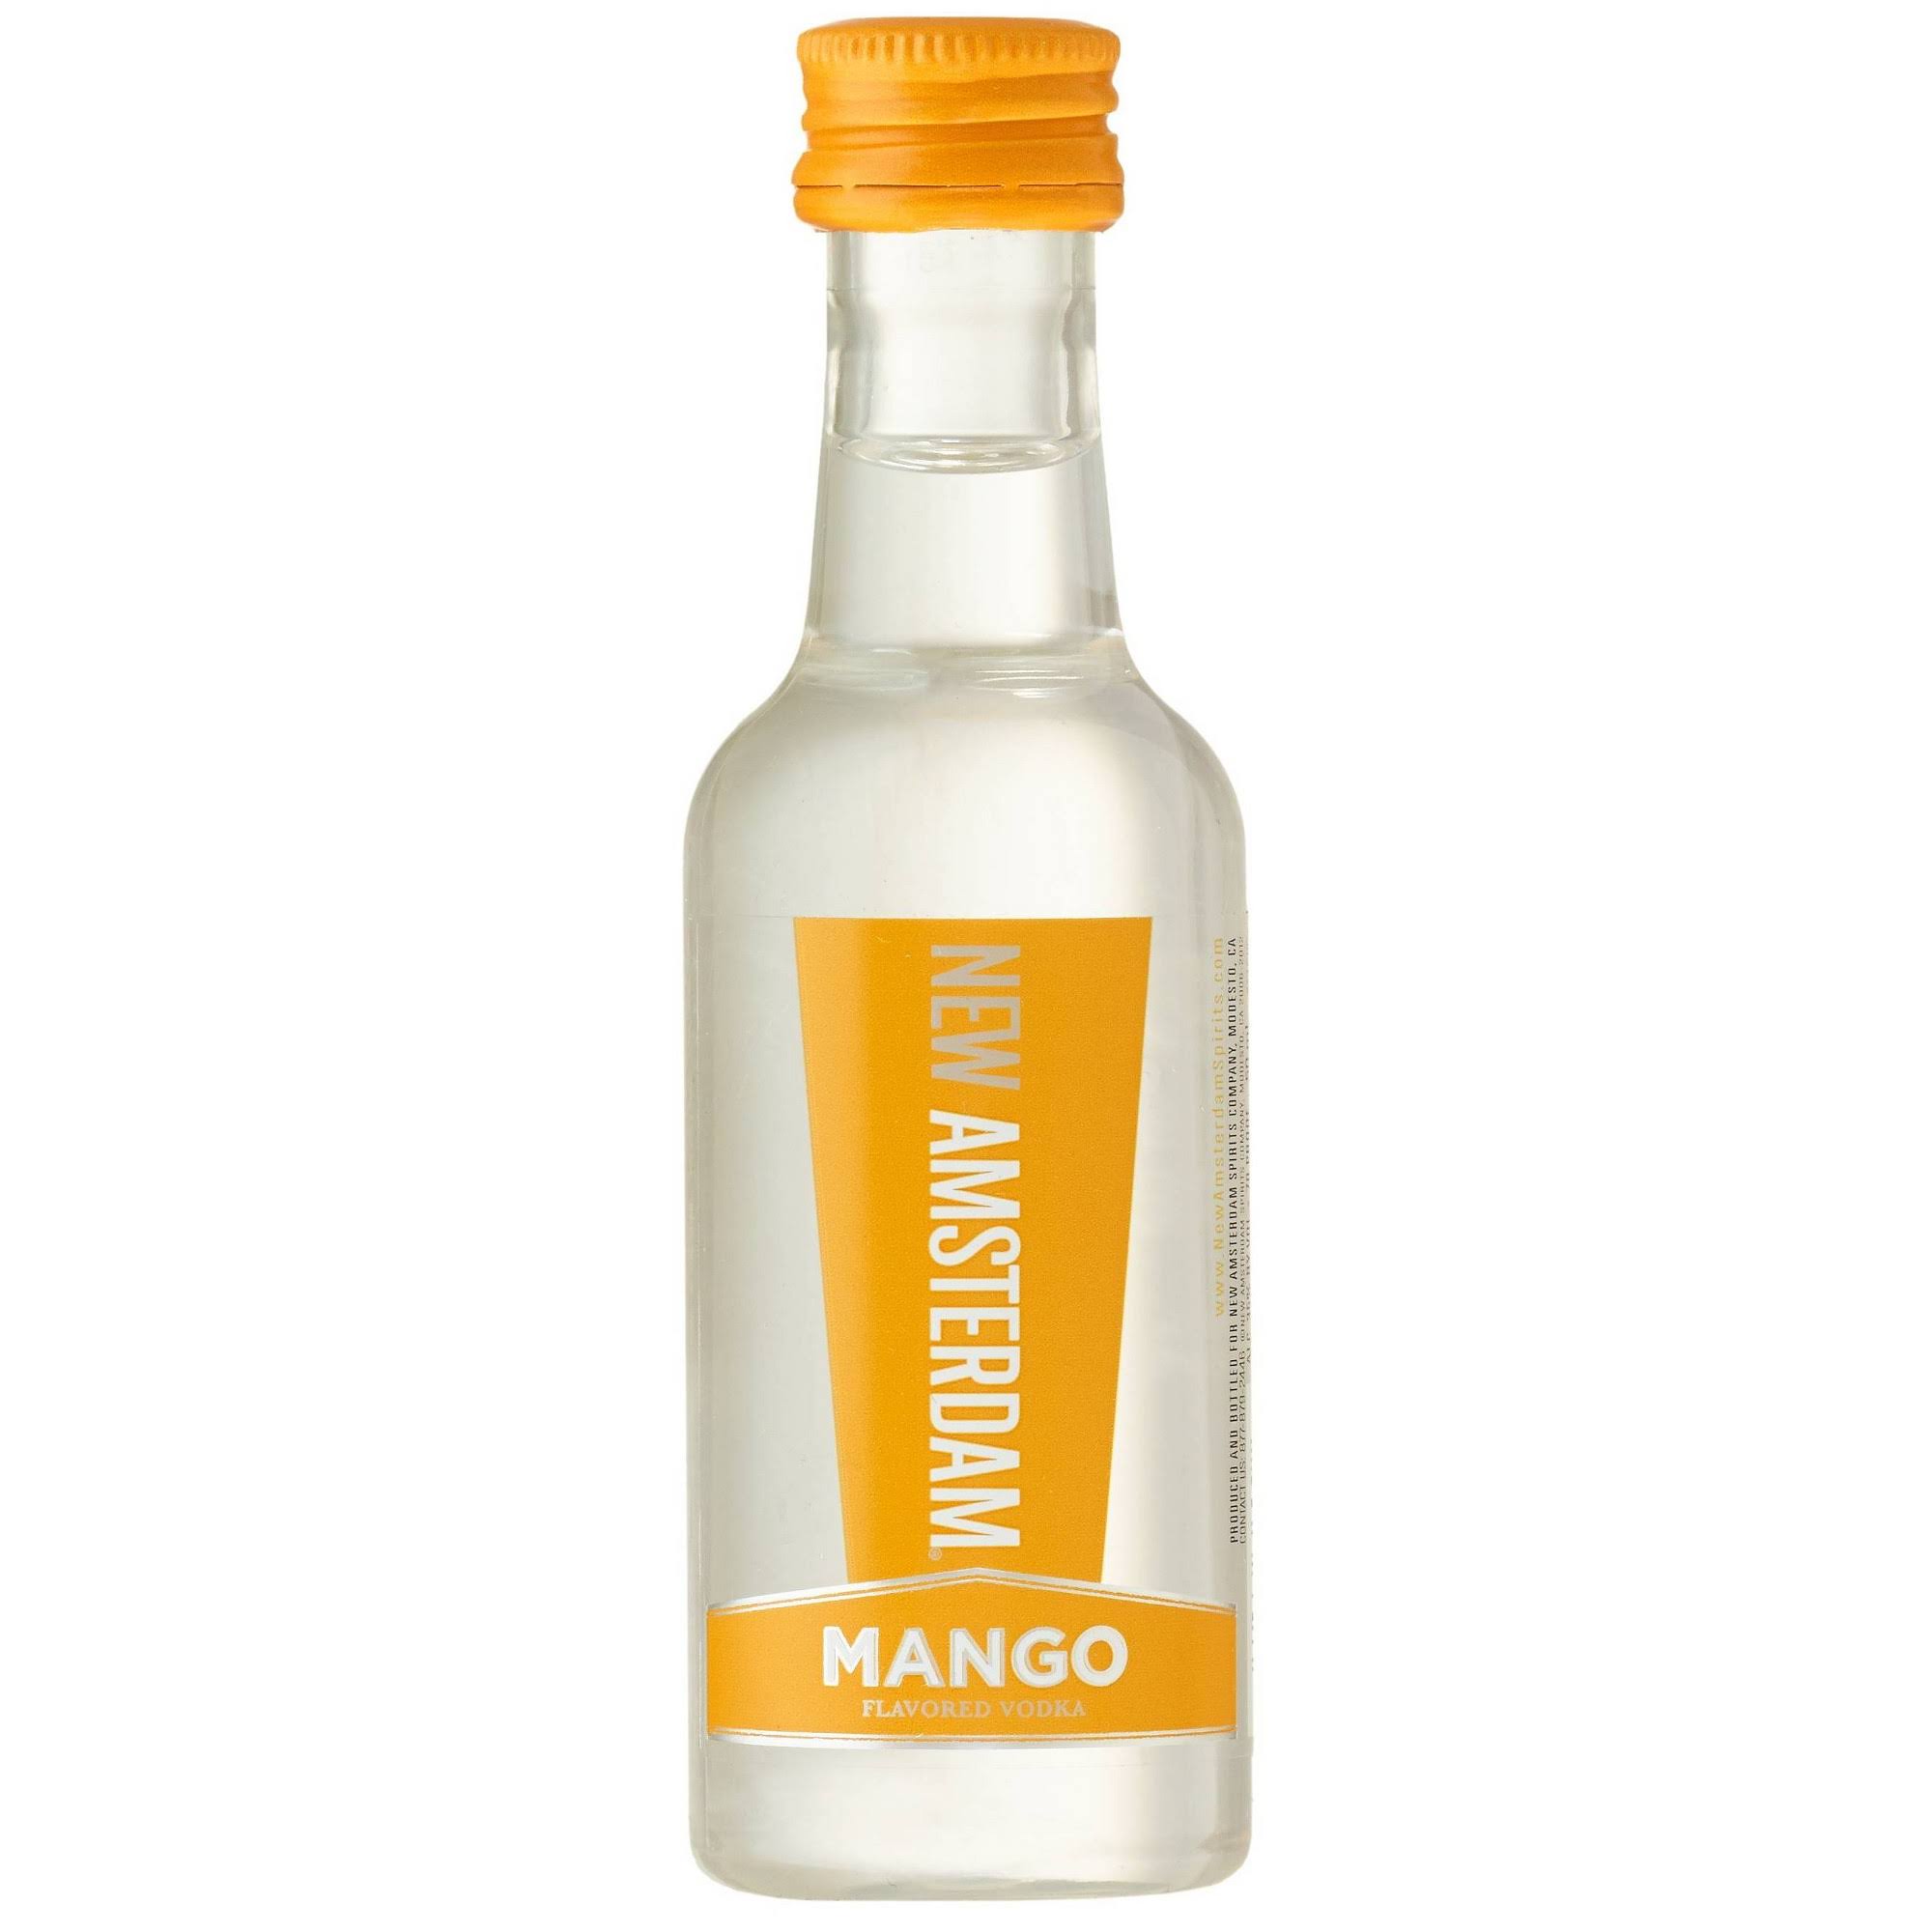 New Amsterdam Vodka Mango 50ml